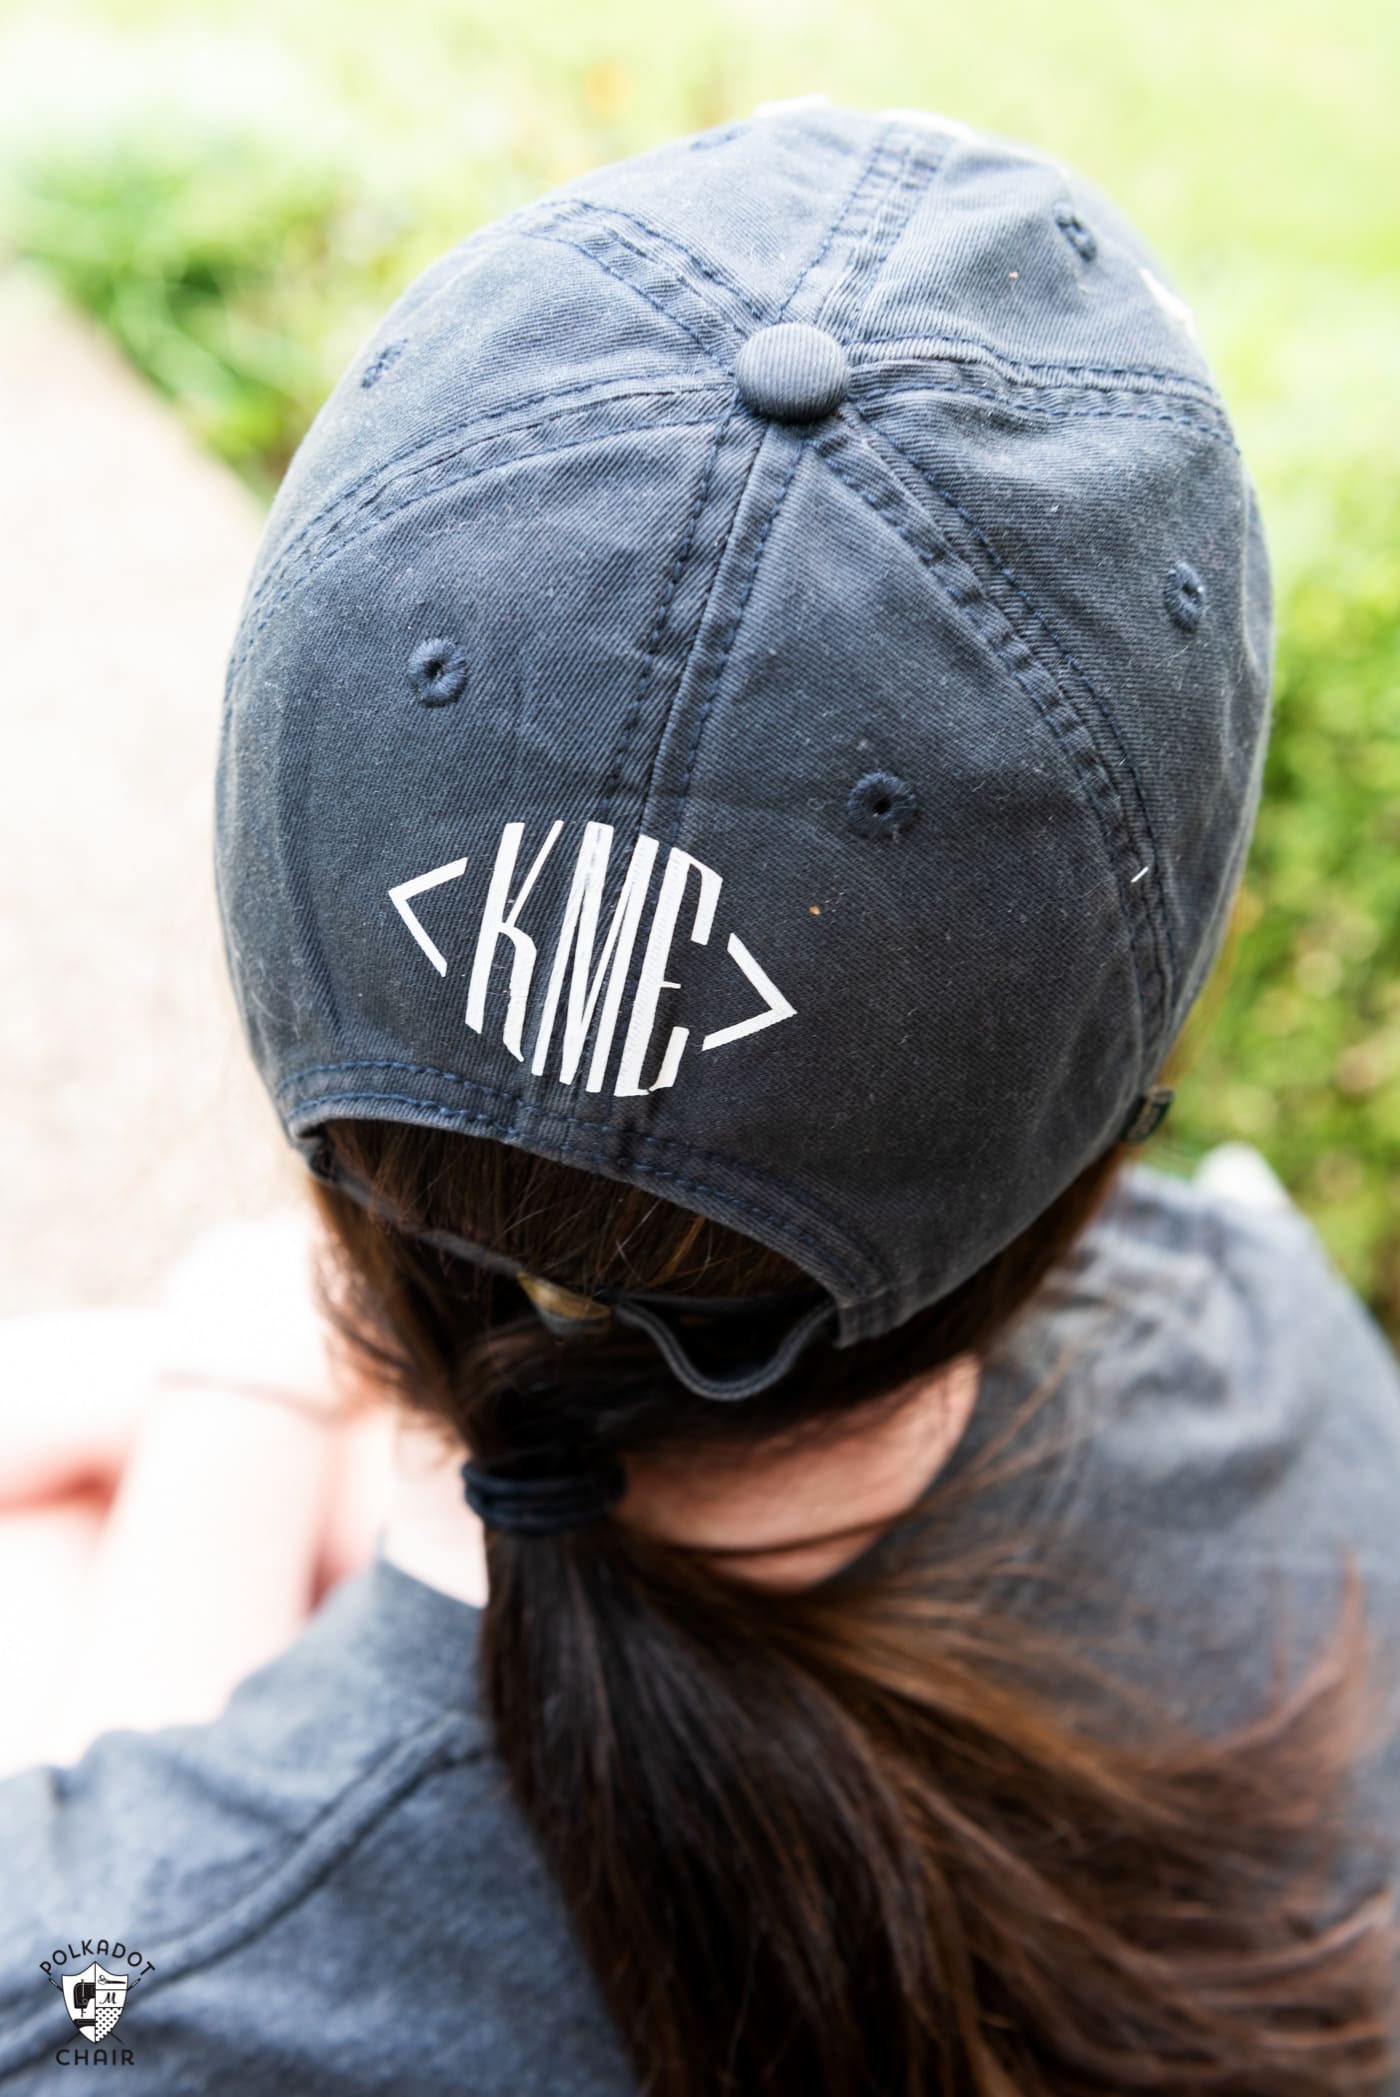 Back of girls head waring a navy baseball cap with white monogram "KME". 